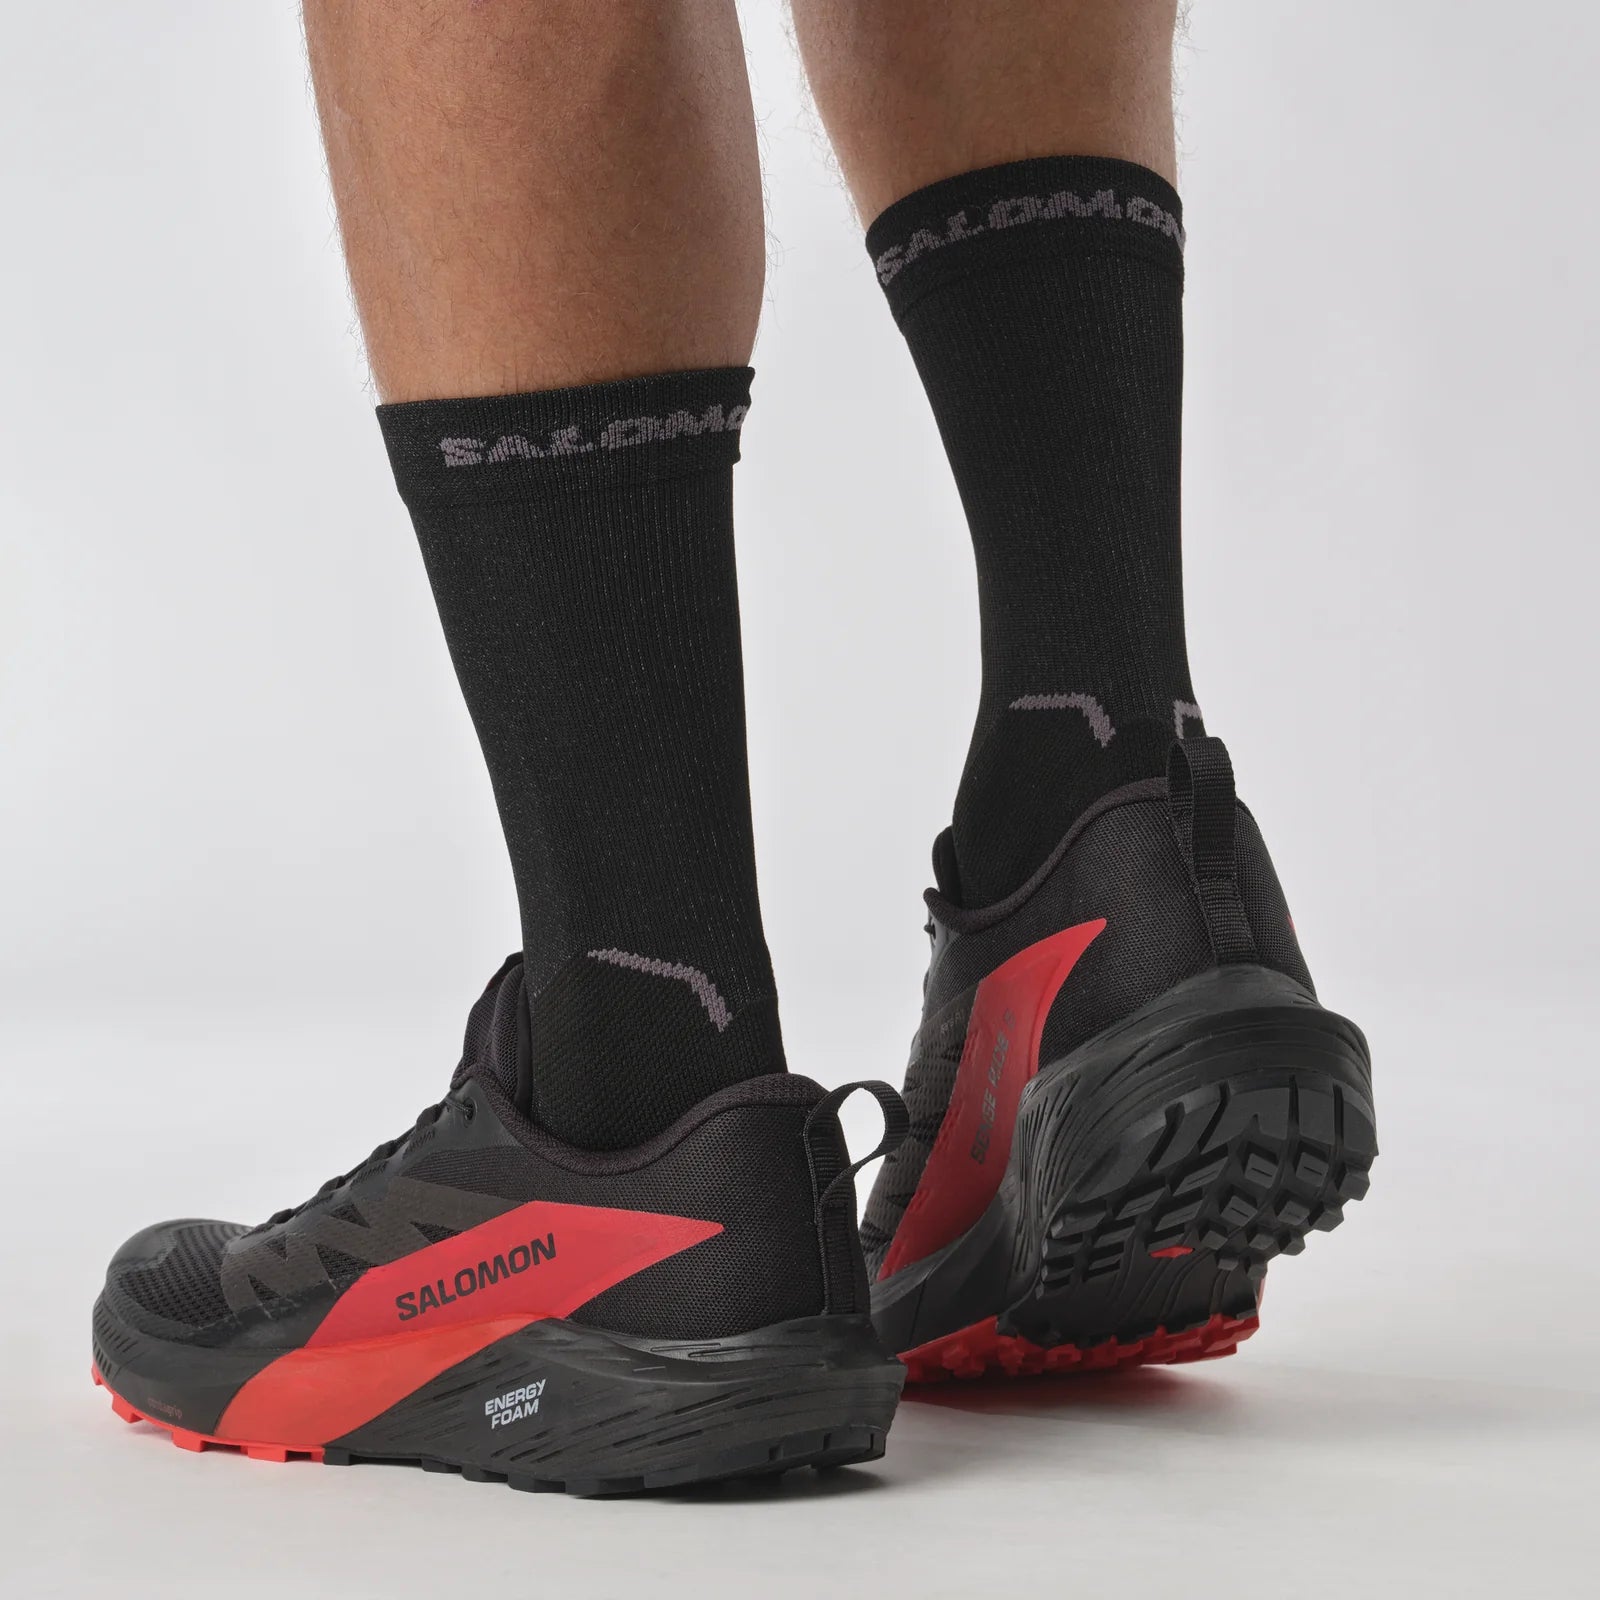 Salomon Sense Ride 5 Shoes (Men's) Black/Fiery Red/Black - Find Your Feet Australia Hobart Launceston Tasmania